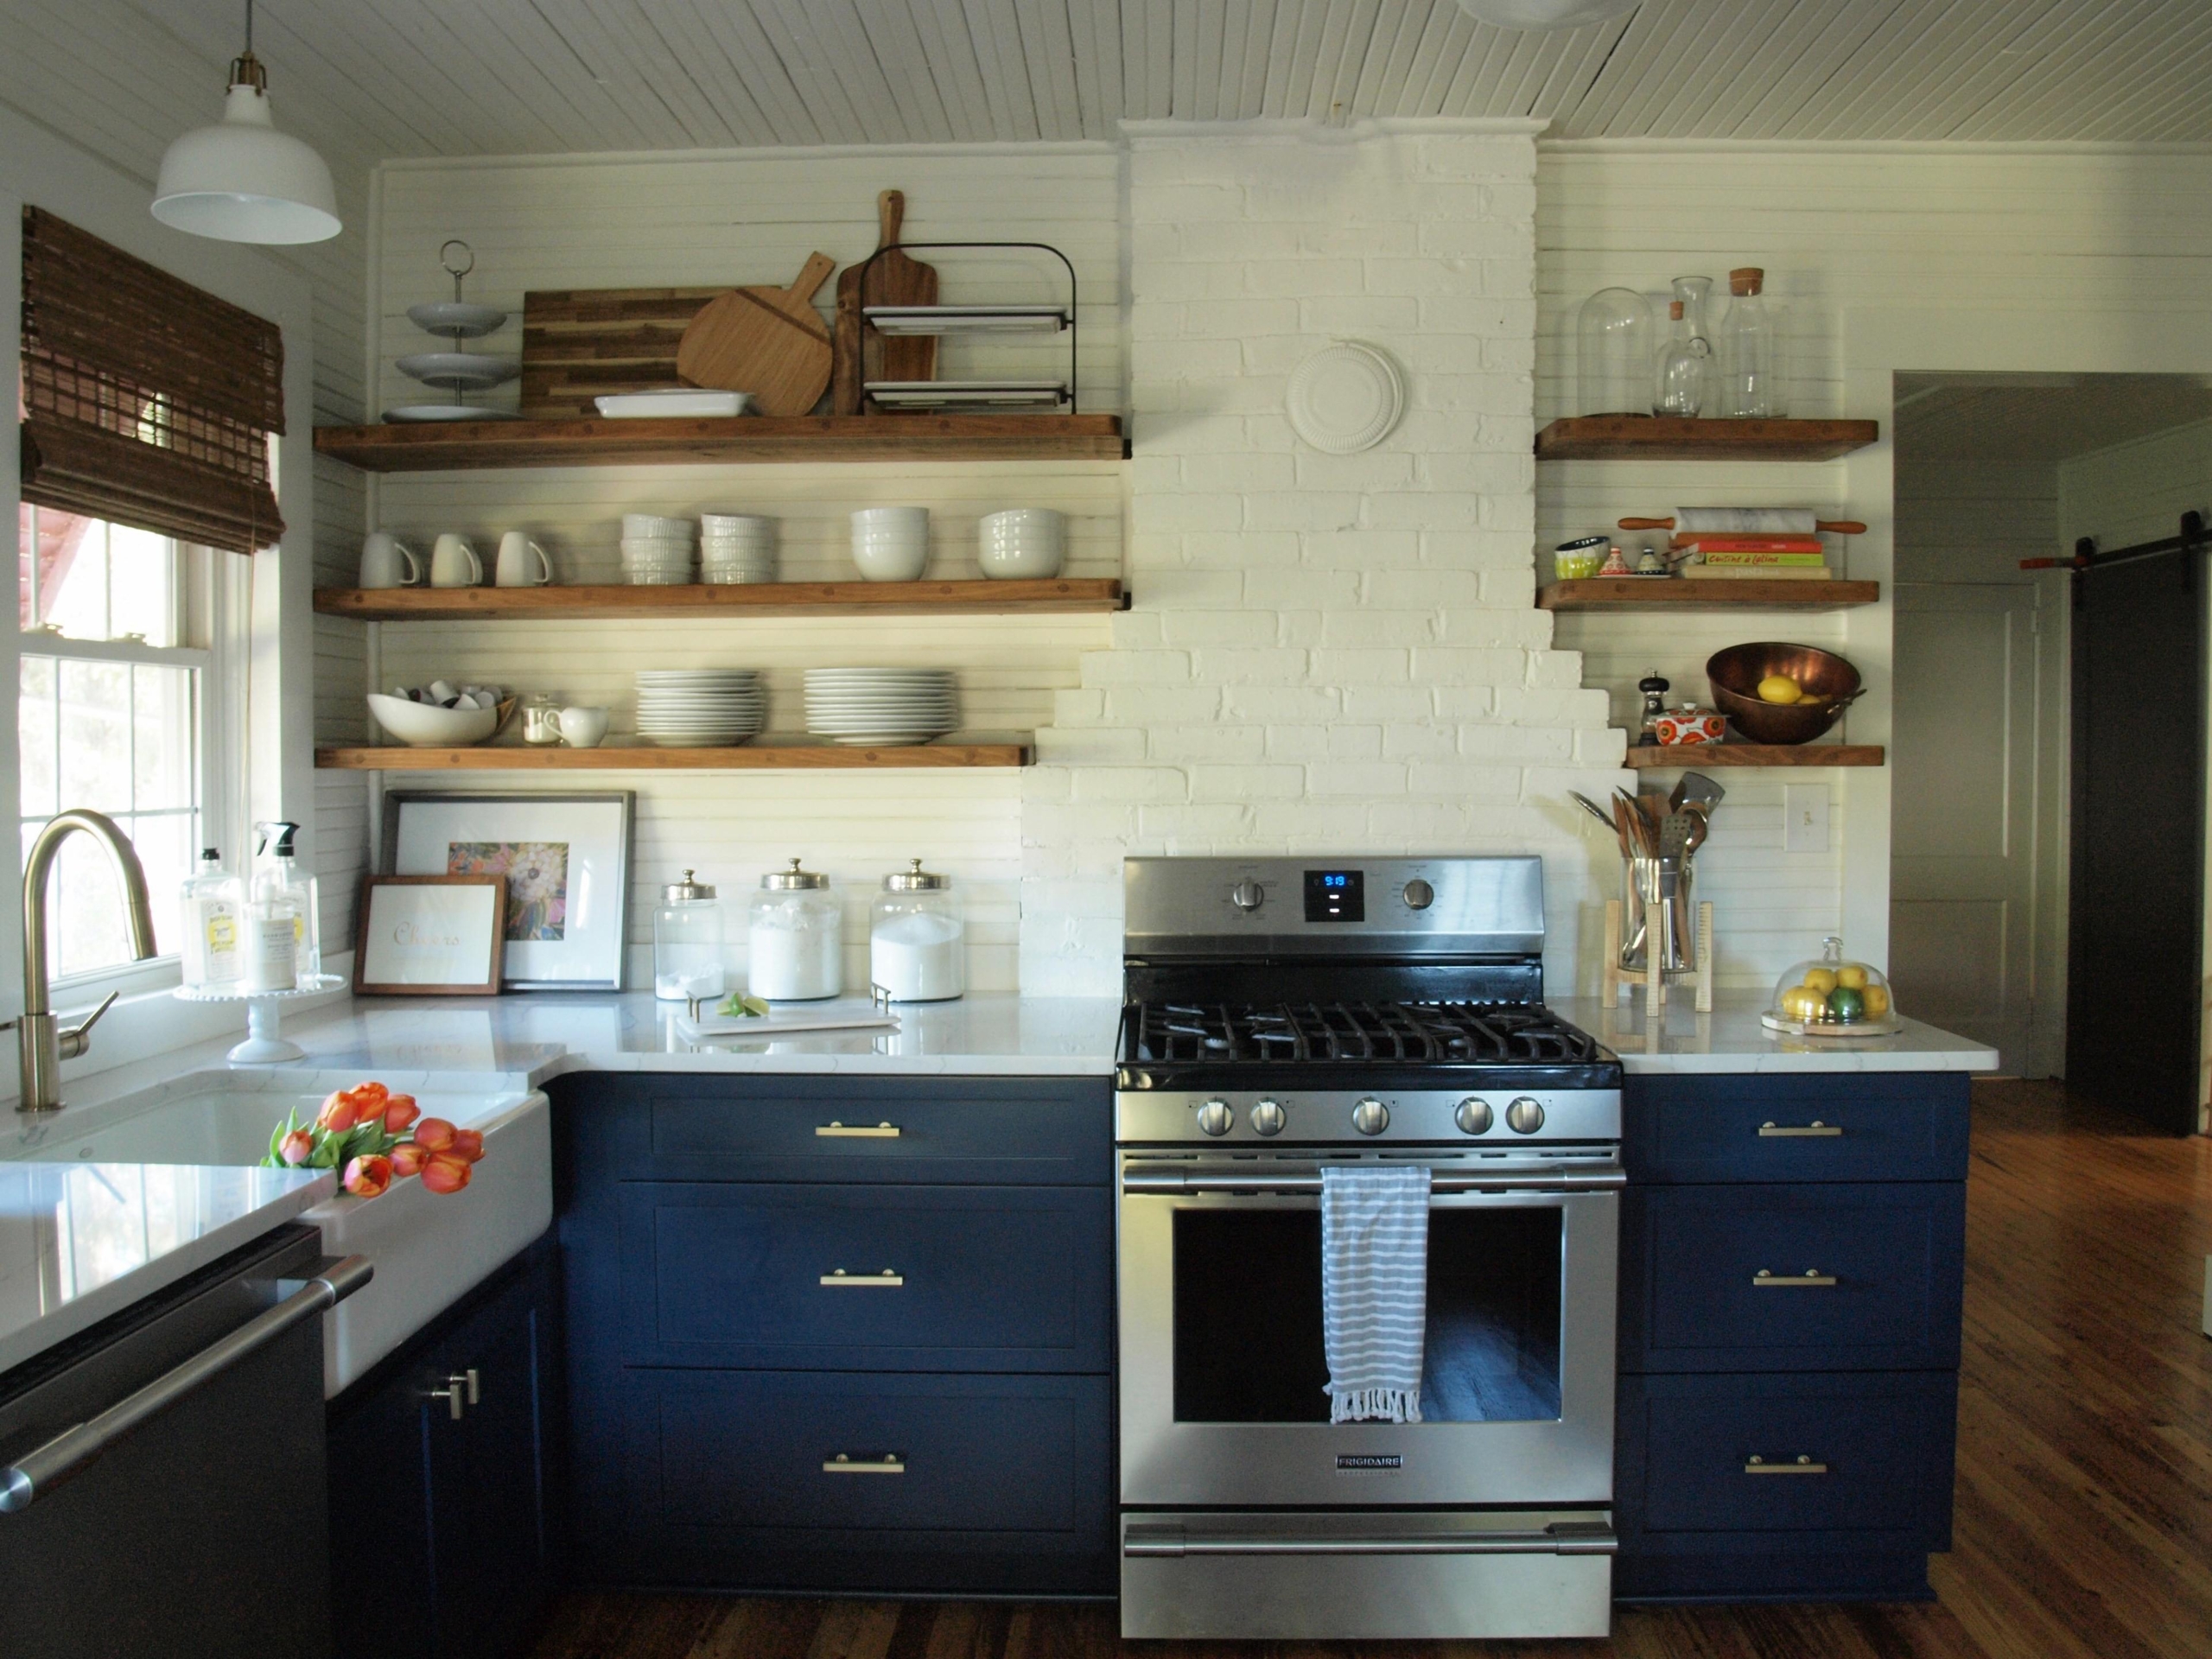 https://foter.com/photos/424/kitchen-making-use-of-open-shelving.jpg